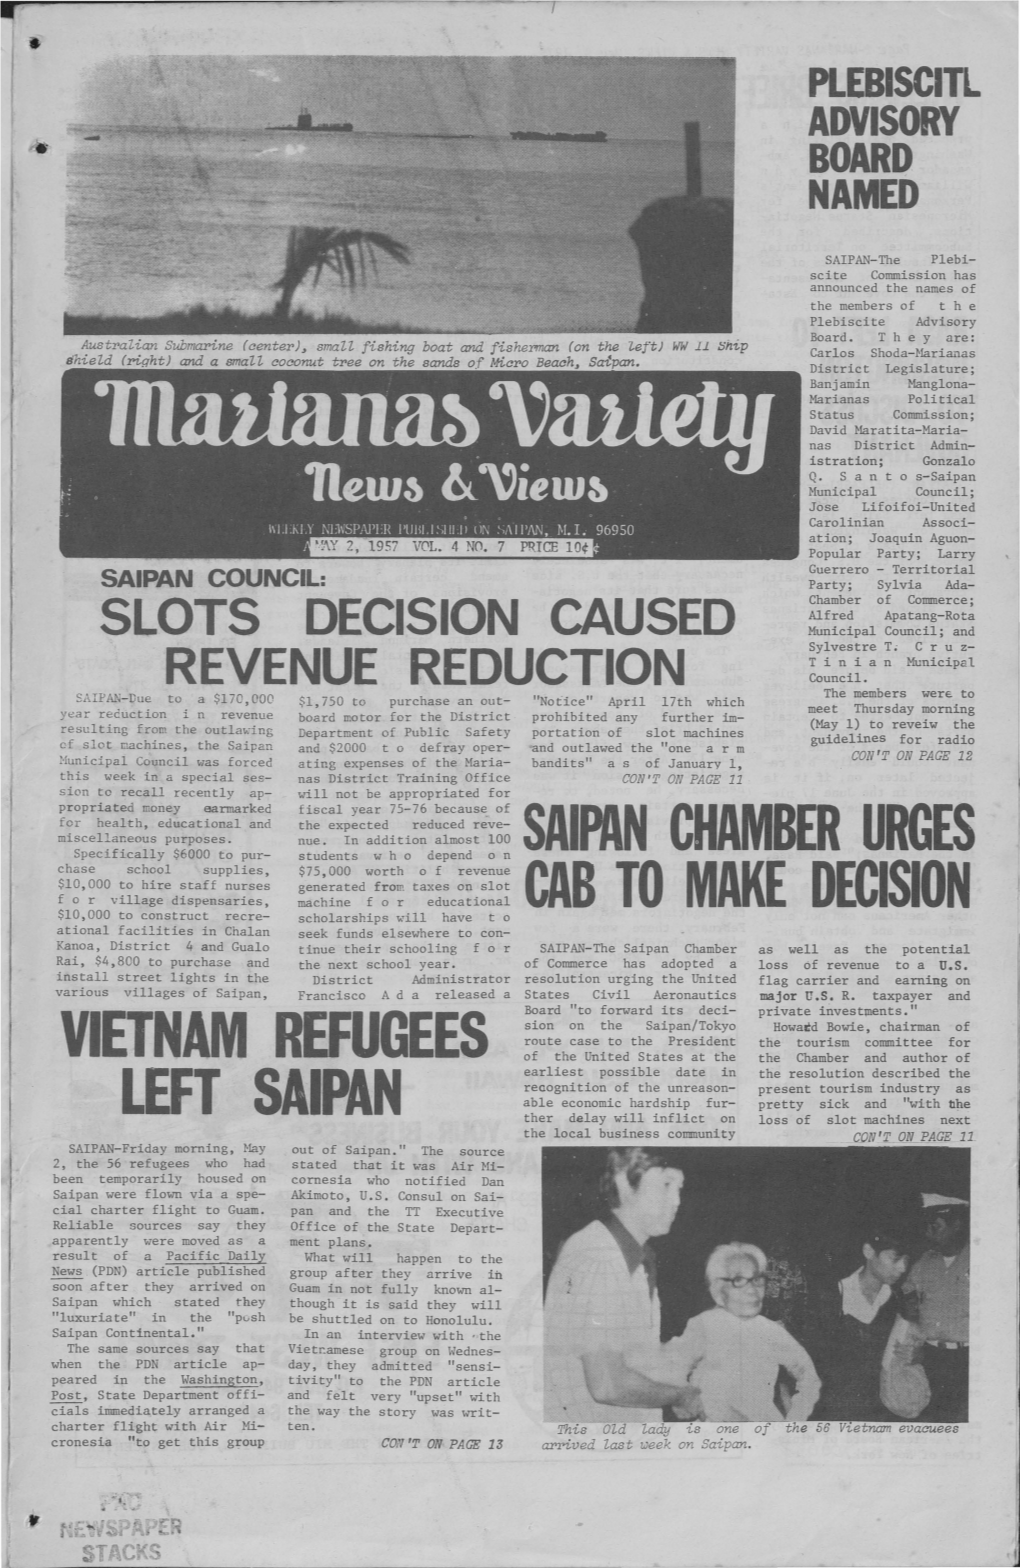 Vietnam Refugees Left Saipan Saipan Chamber Urges Cab